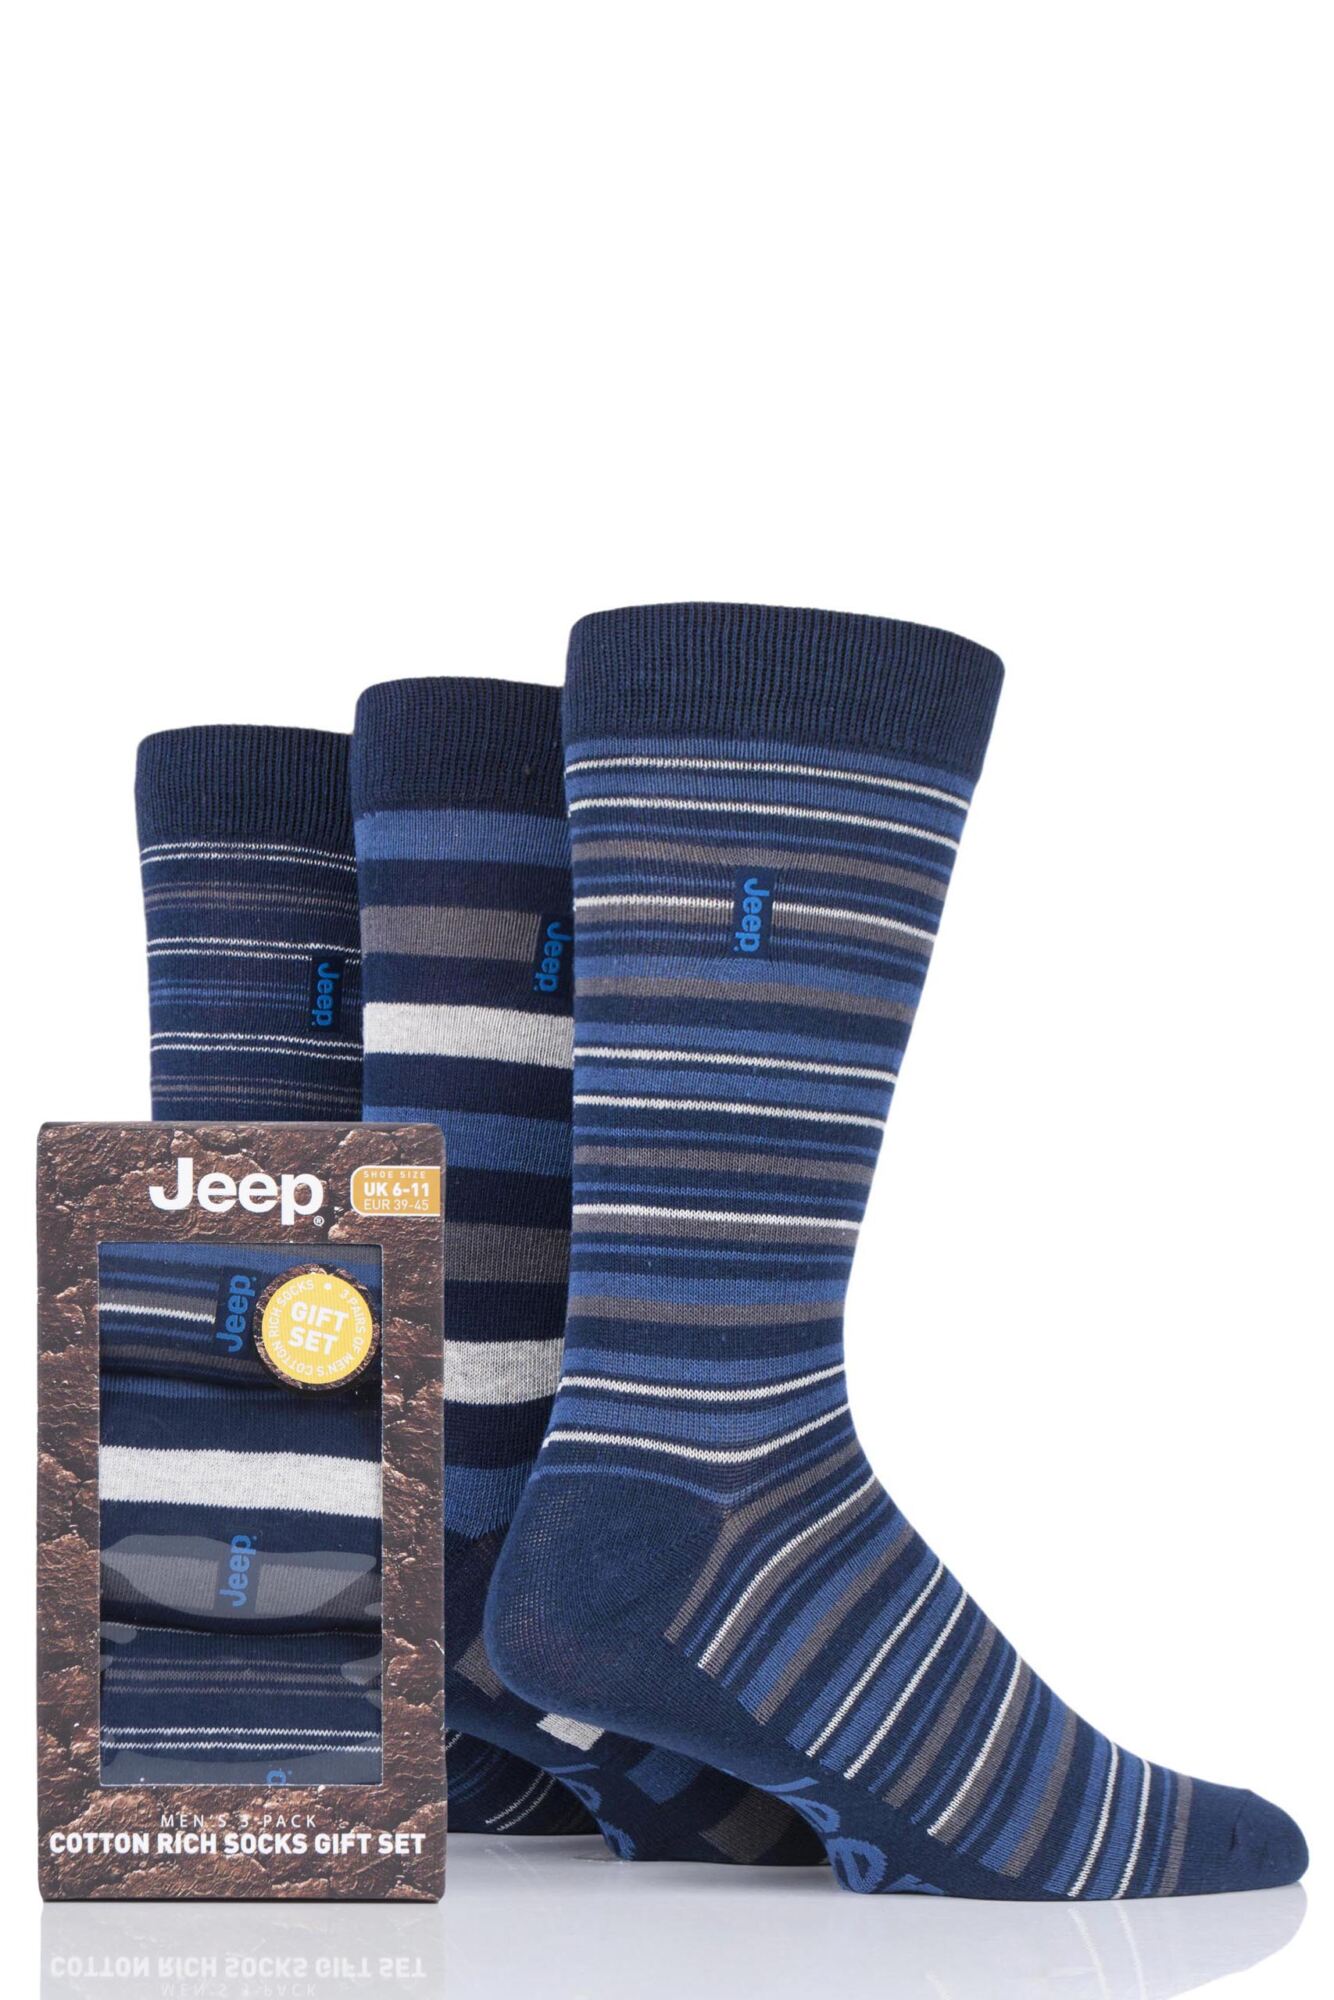 3 Pair Cotton Thick Stripe Gift Set Socks Men's - Jeep